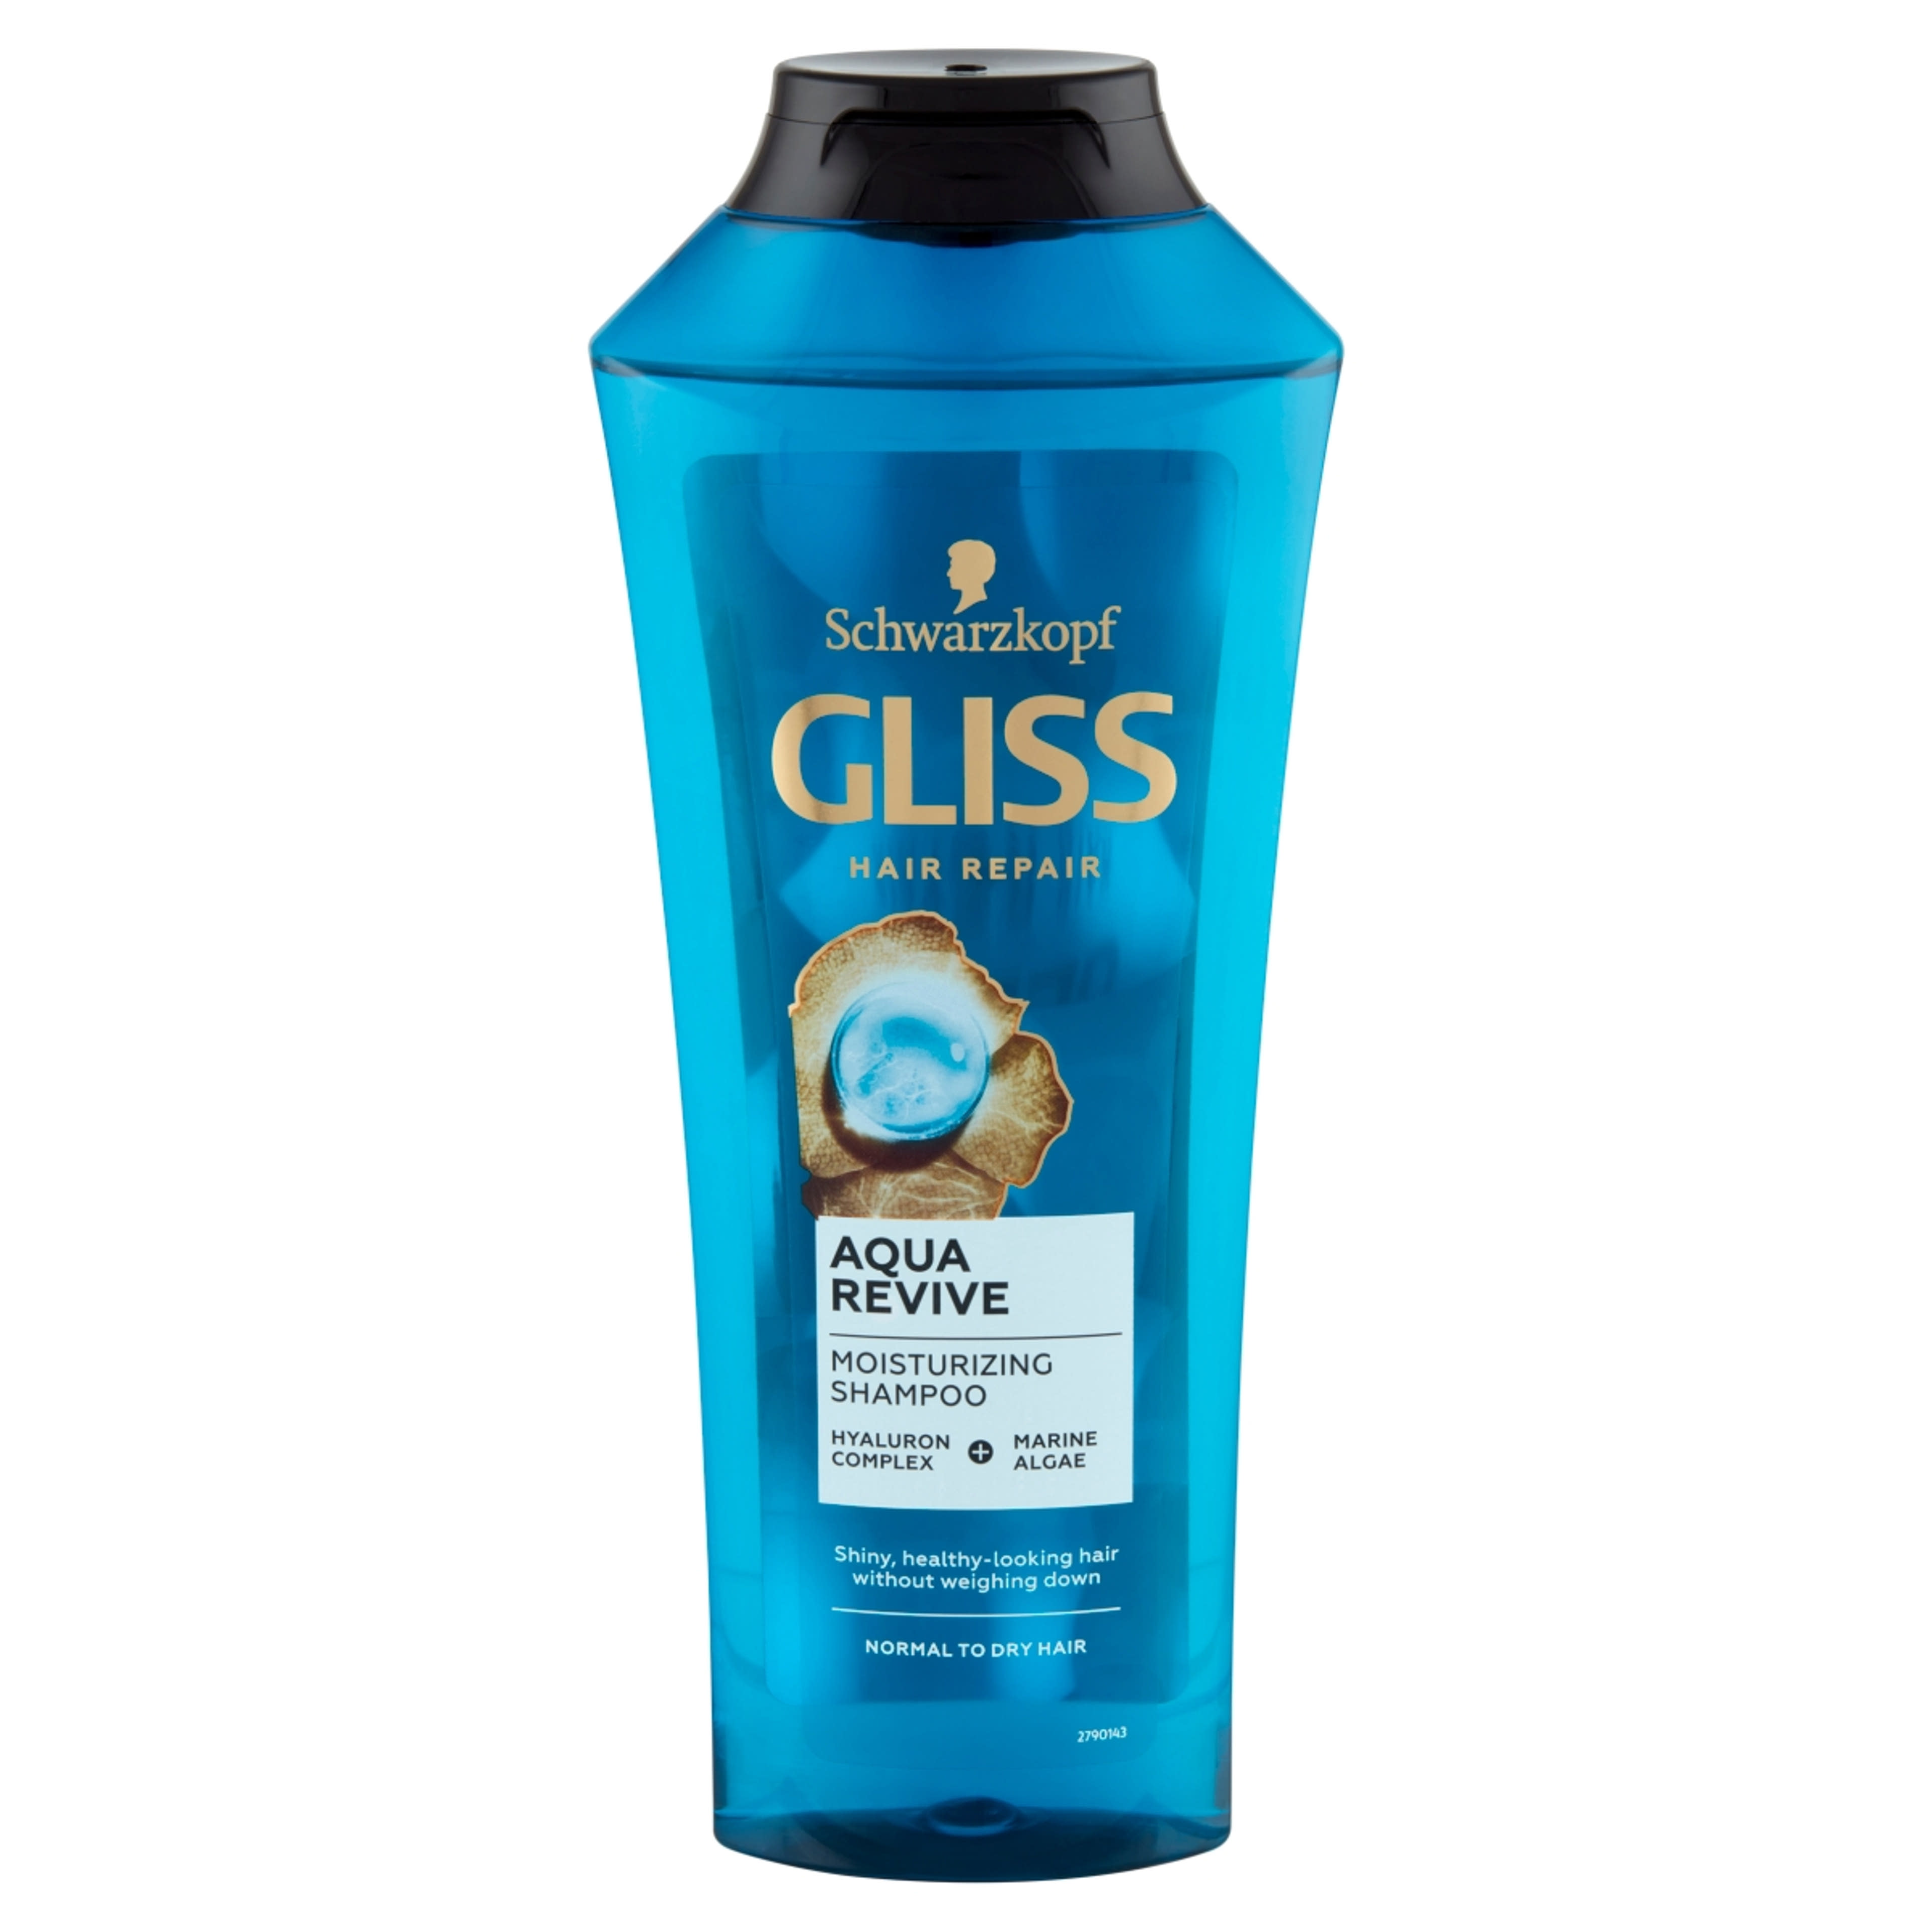 Gliss Aqua Revive sampon - 400 ml-4